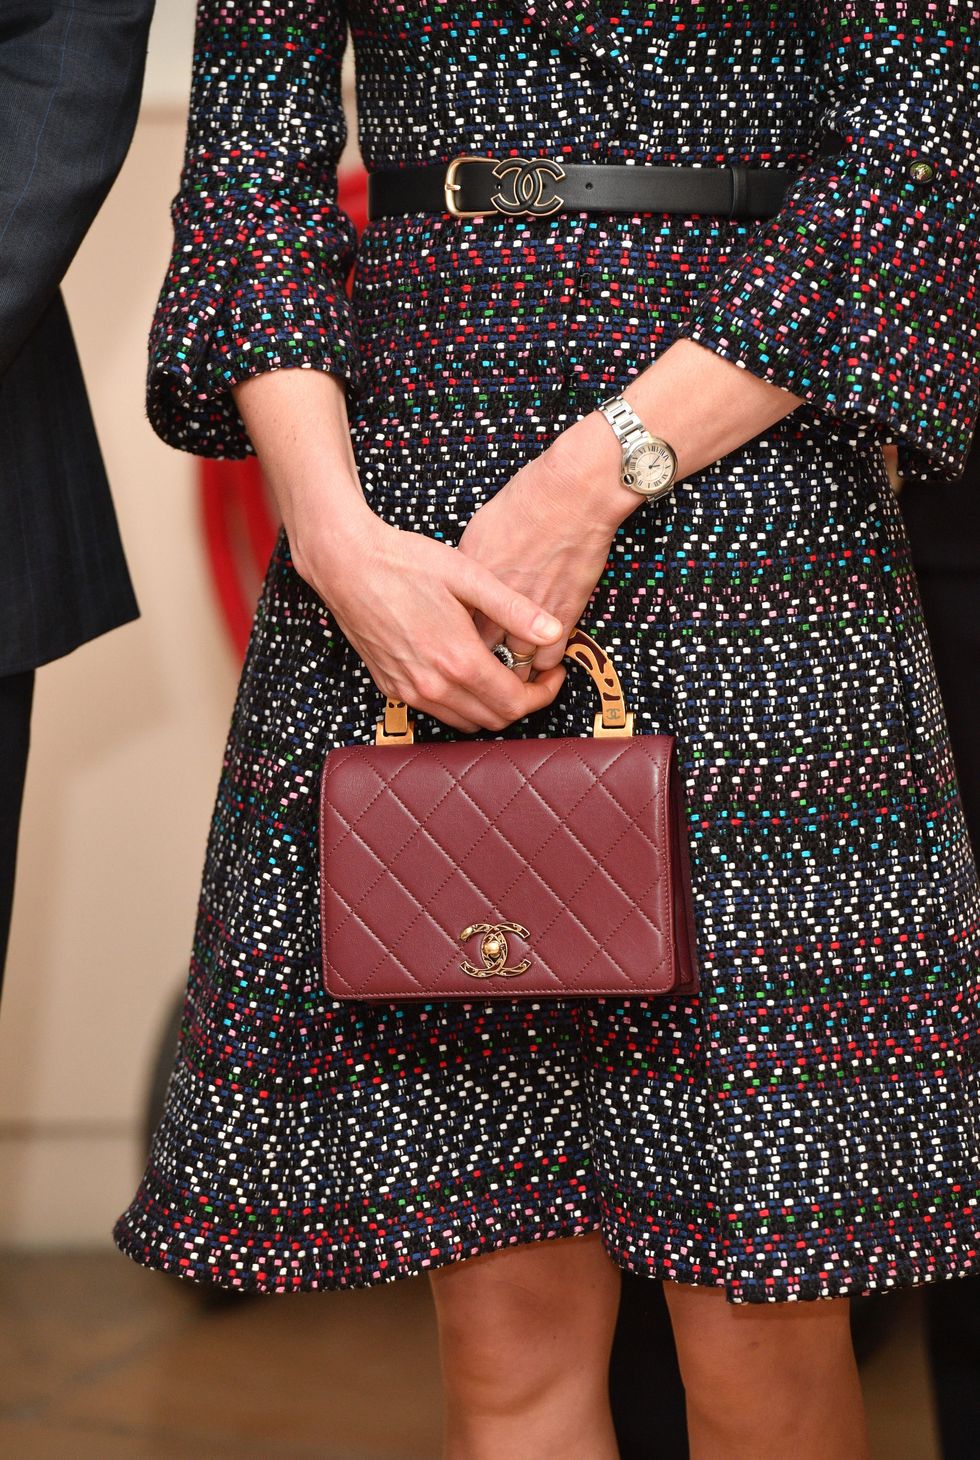 Advantageous PricingPolène, the new 'It' handbag brand? As its